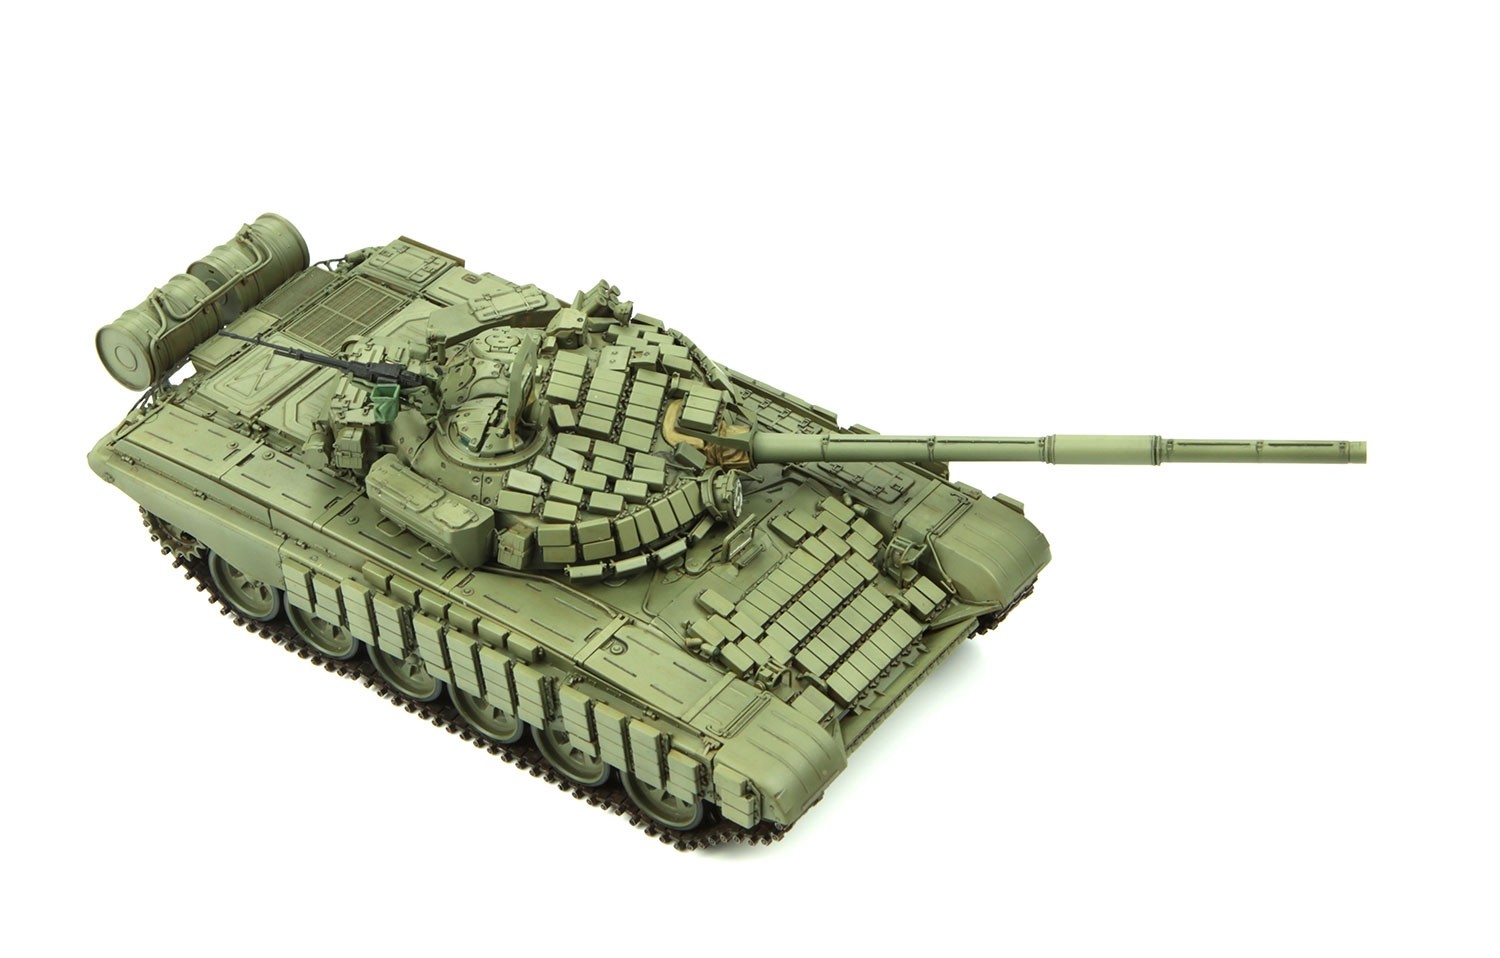 Meng Russian Main Battle Tank T-72B1 TS-033